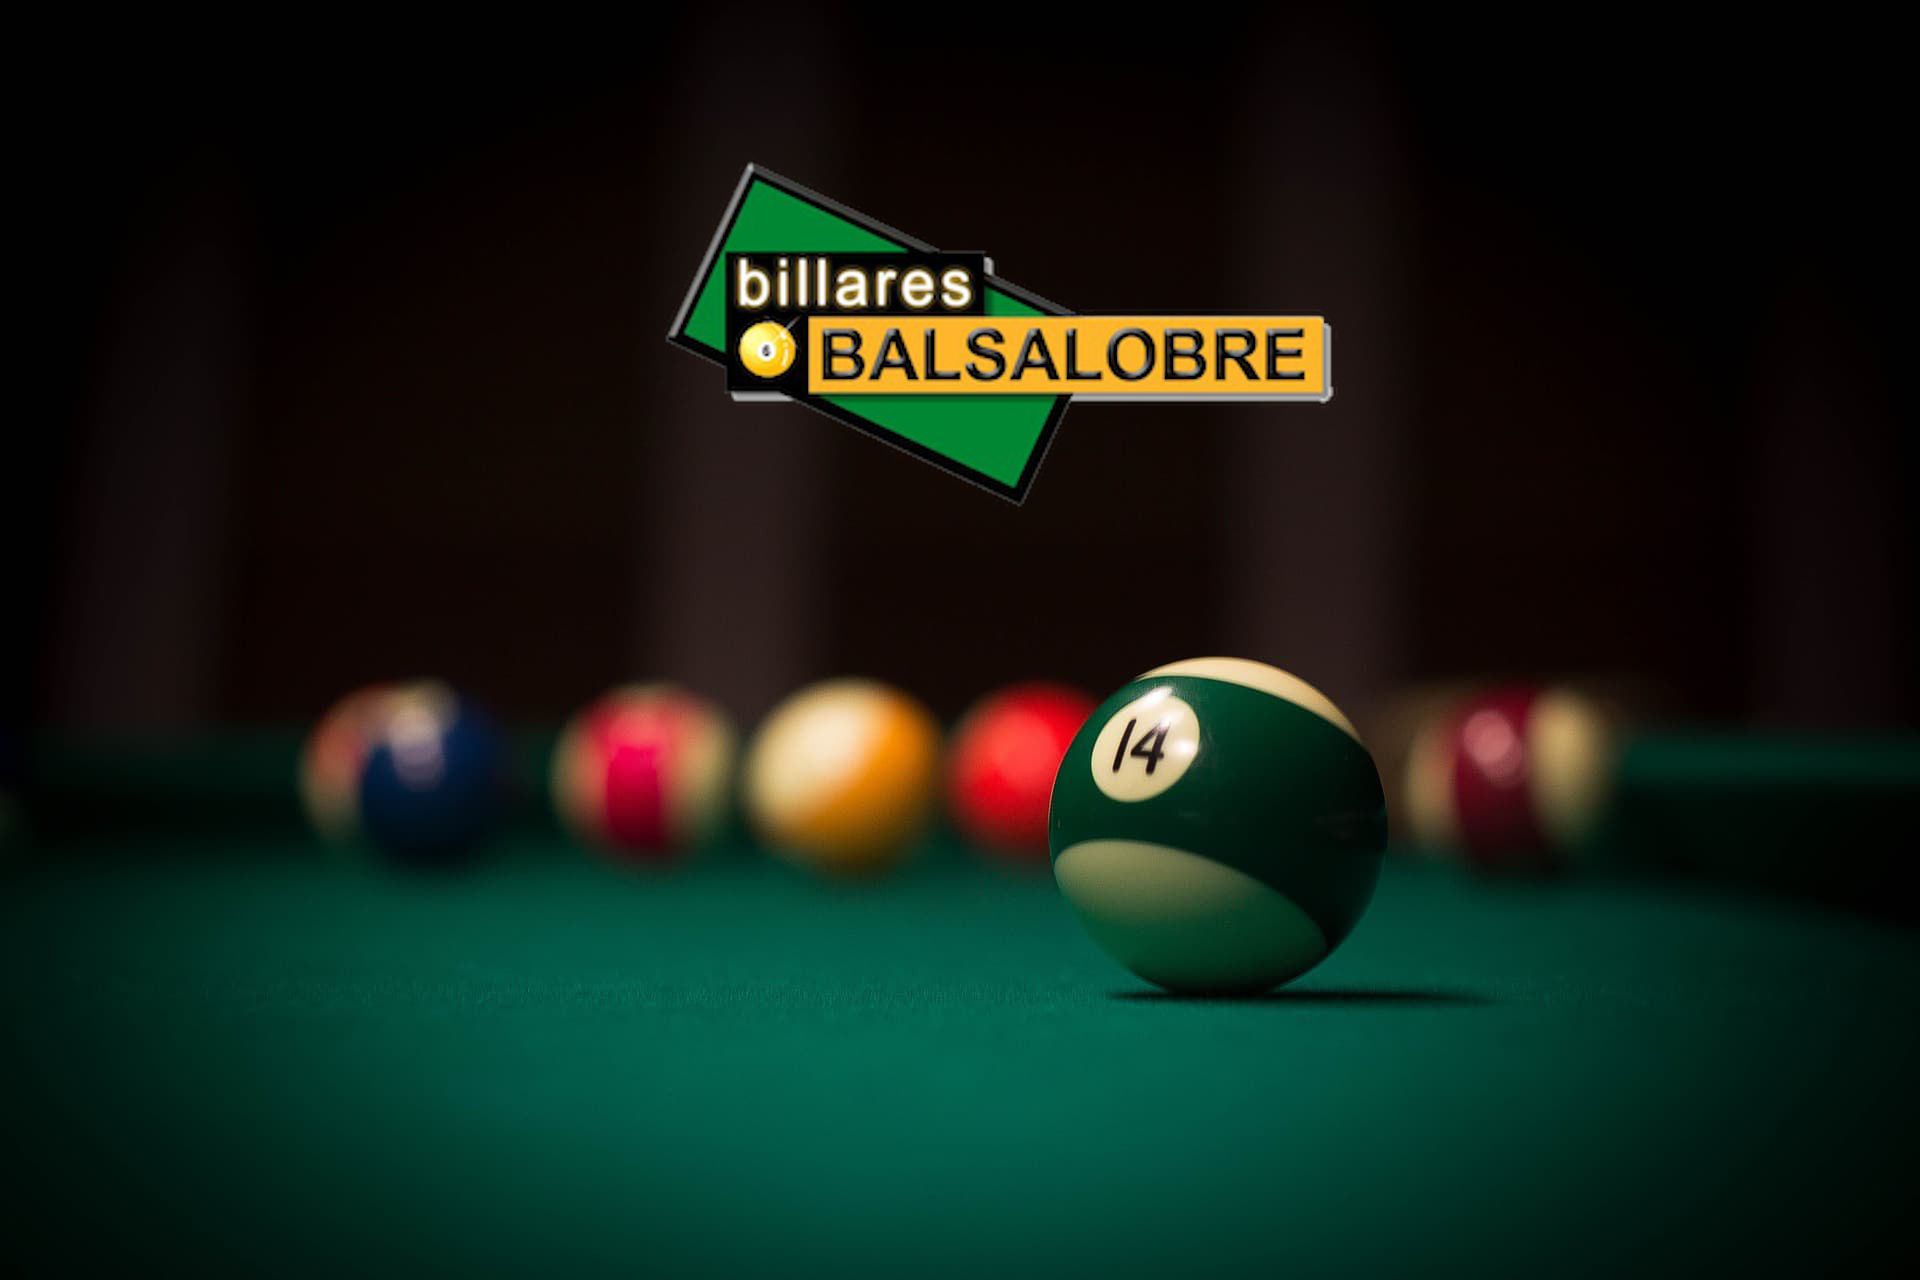 (c) Billaresbalsalobre.com